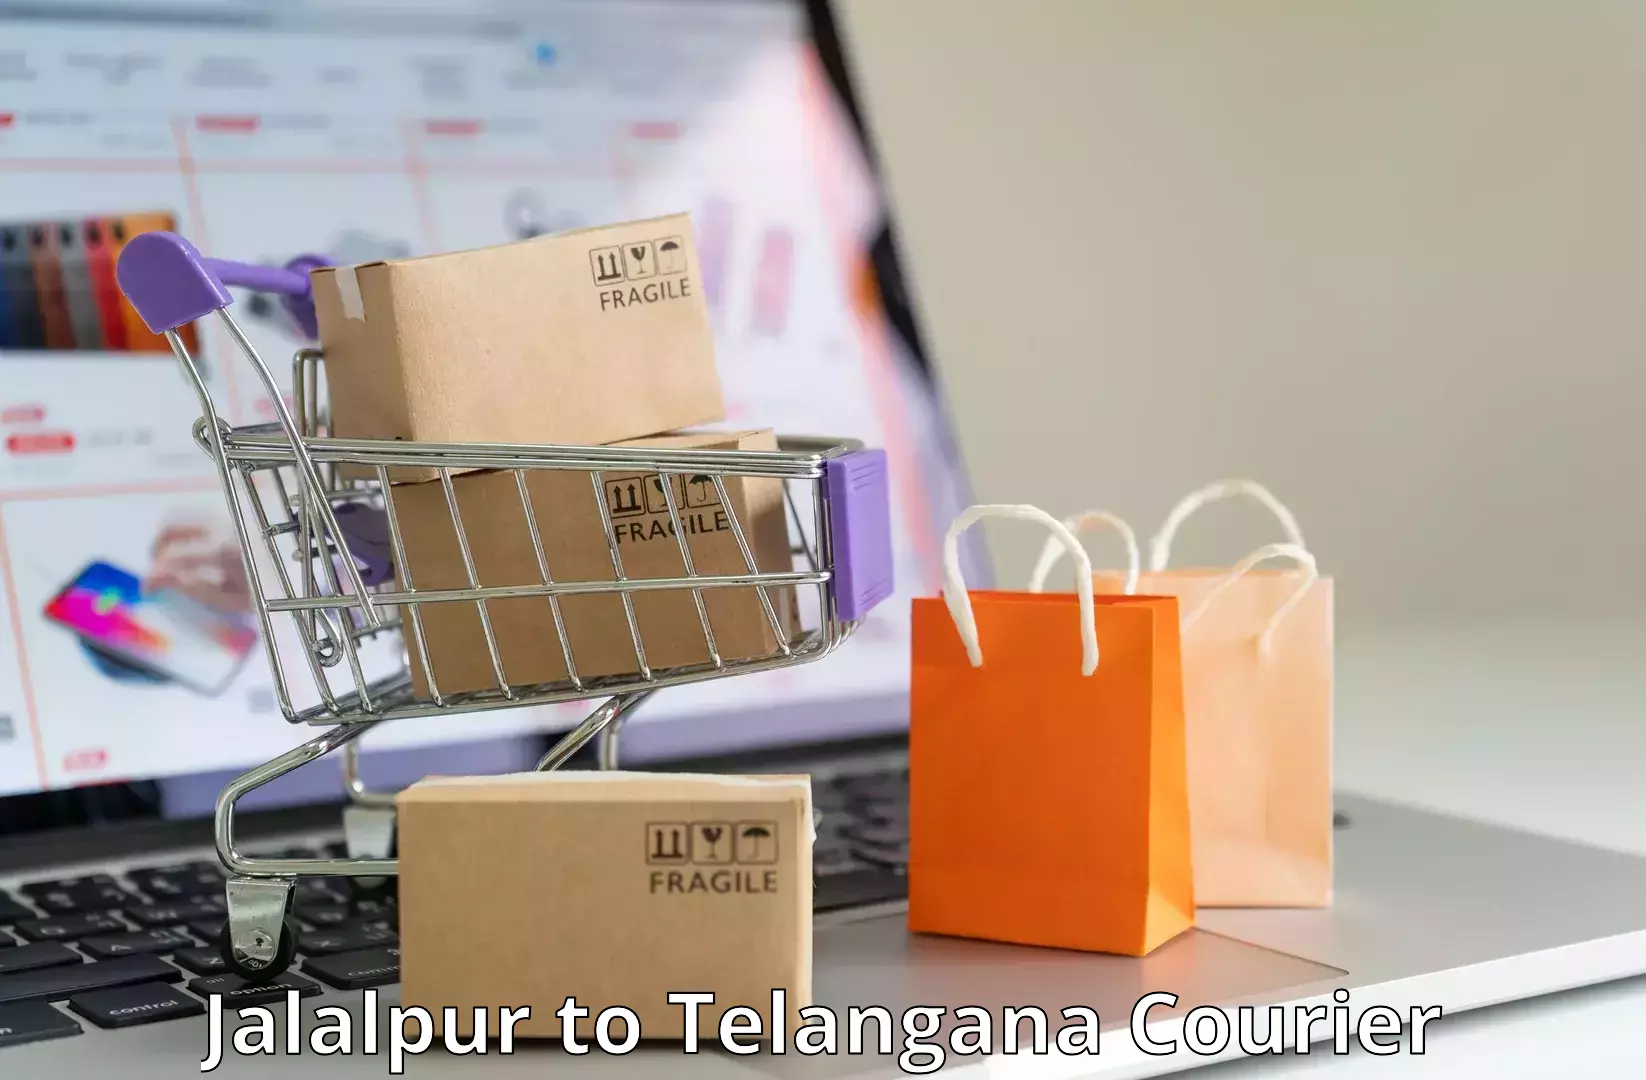 Online package tracking in Jalalpur to Jadcherla